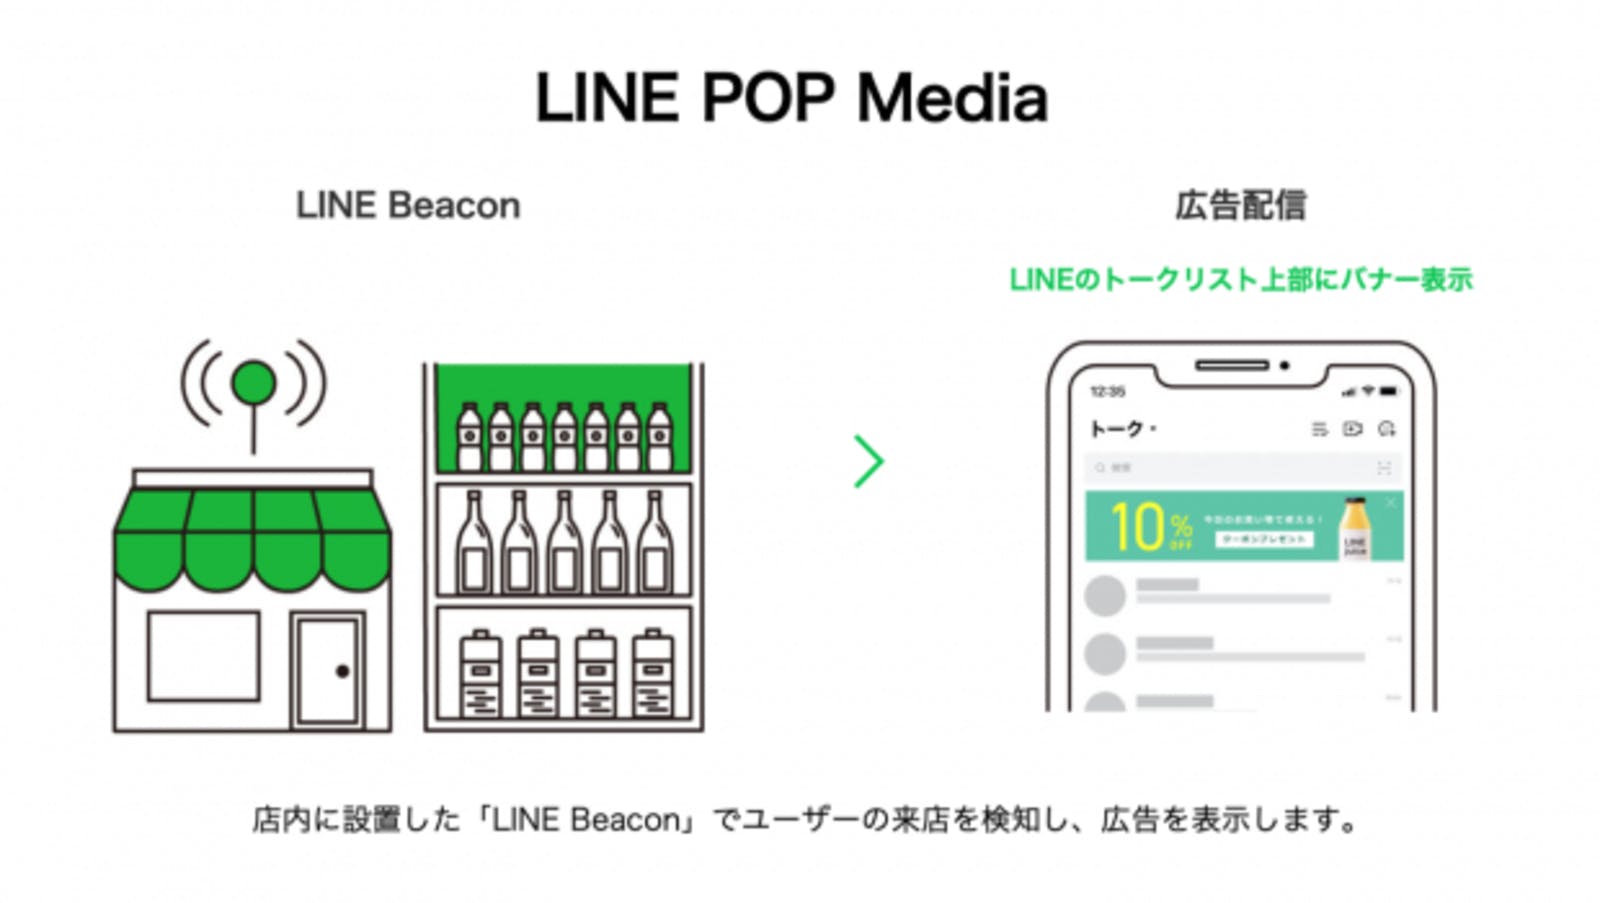 ▲LINE POP Media：LINE